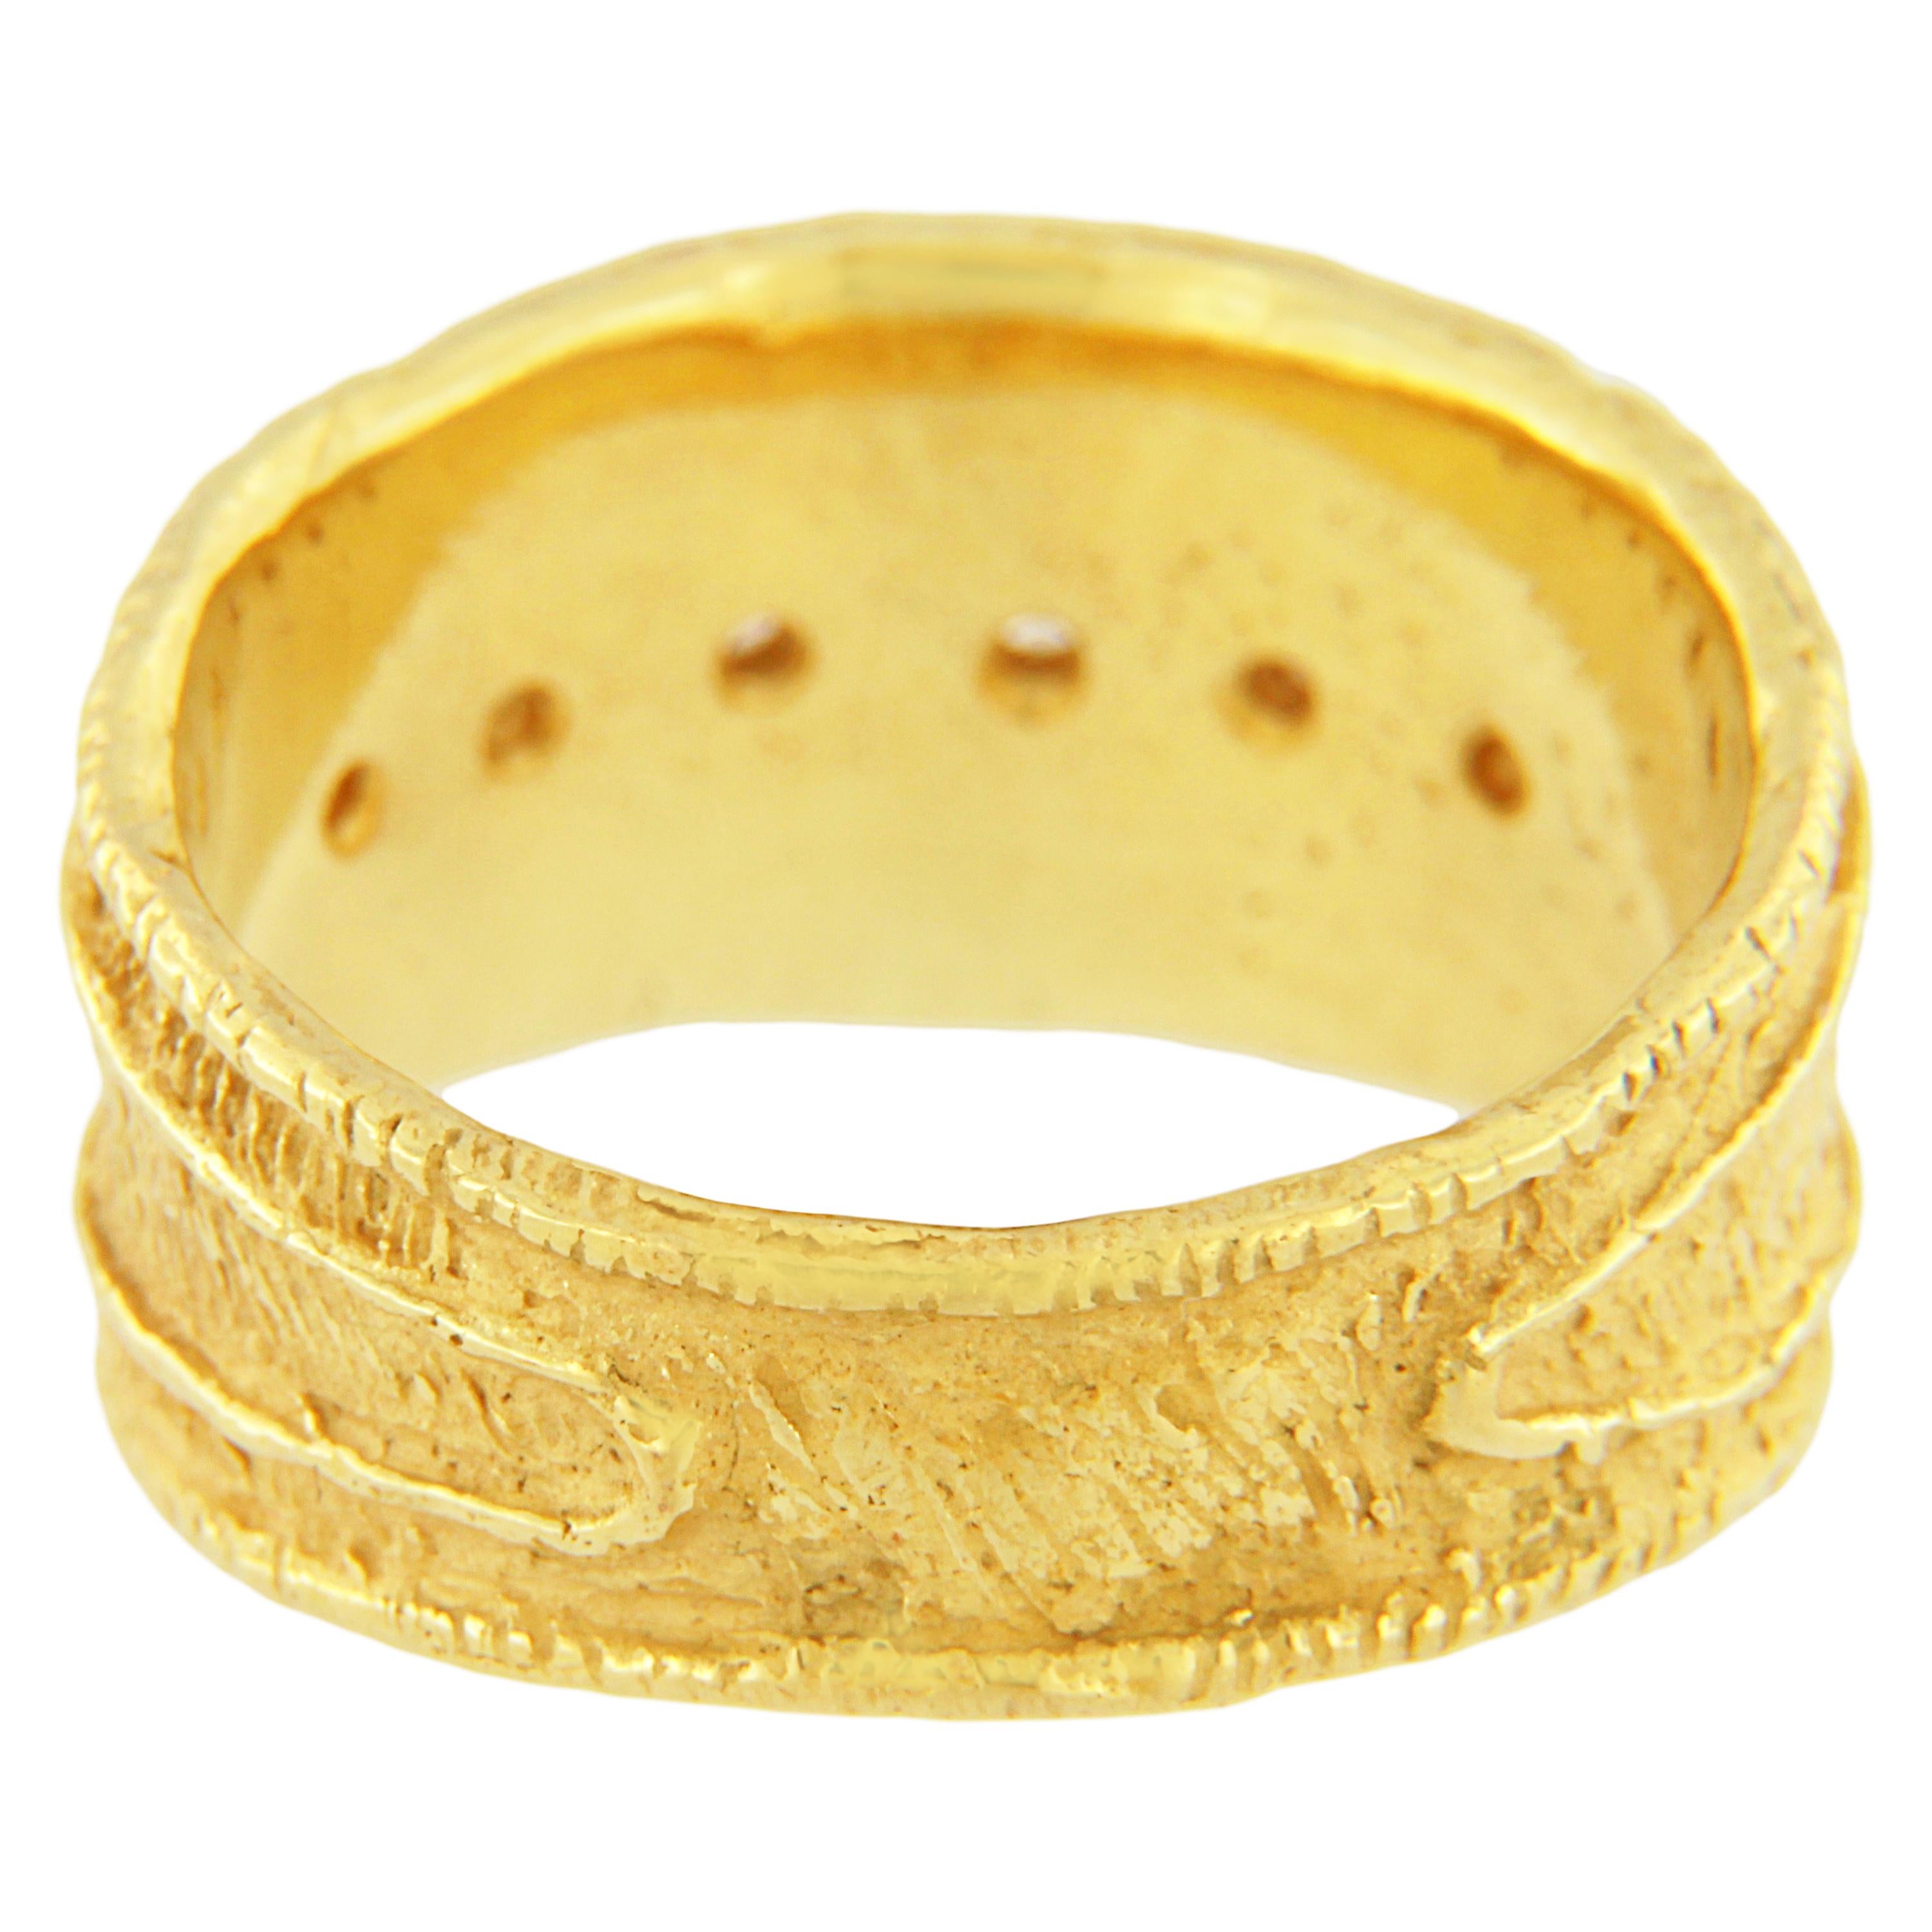 Brilliant Cut Sacchi Diamonds Gemstone 18 Karat Satin Yellow Gold Wide Band Ring Roman Style